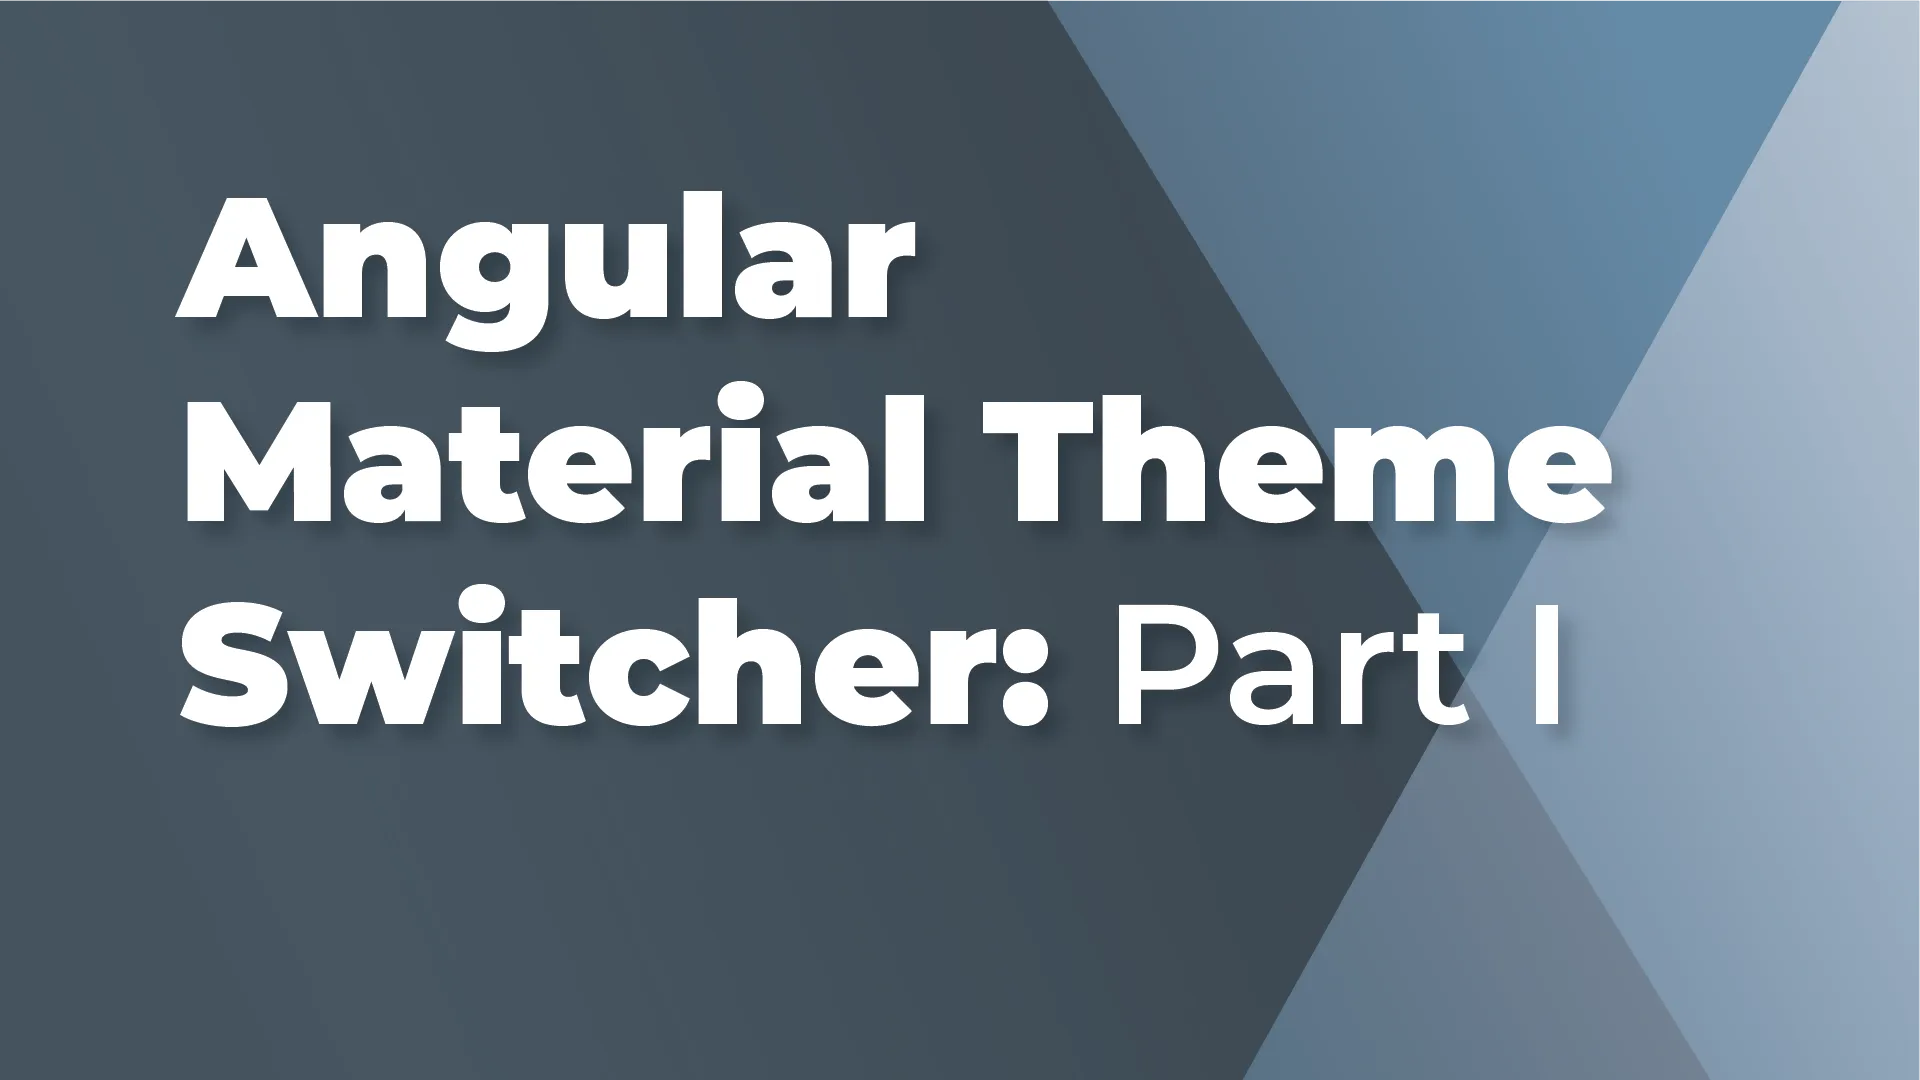 Angular Material Theme Switcher: Part 1